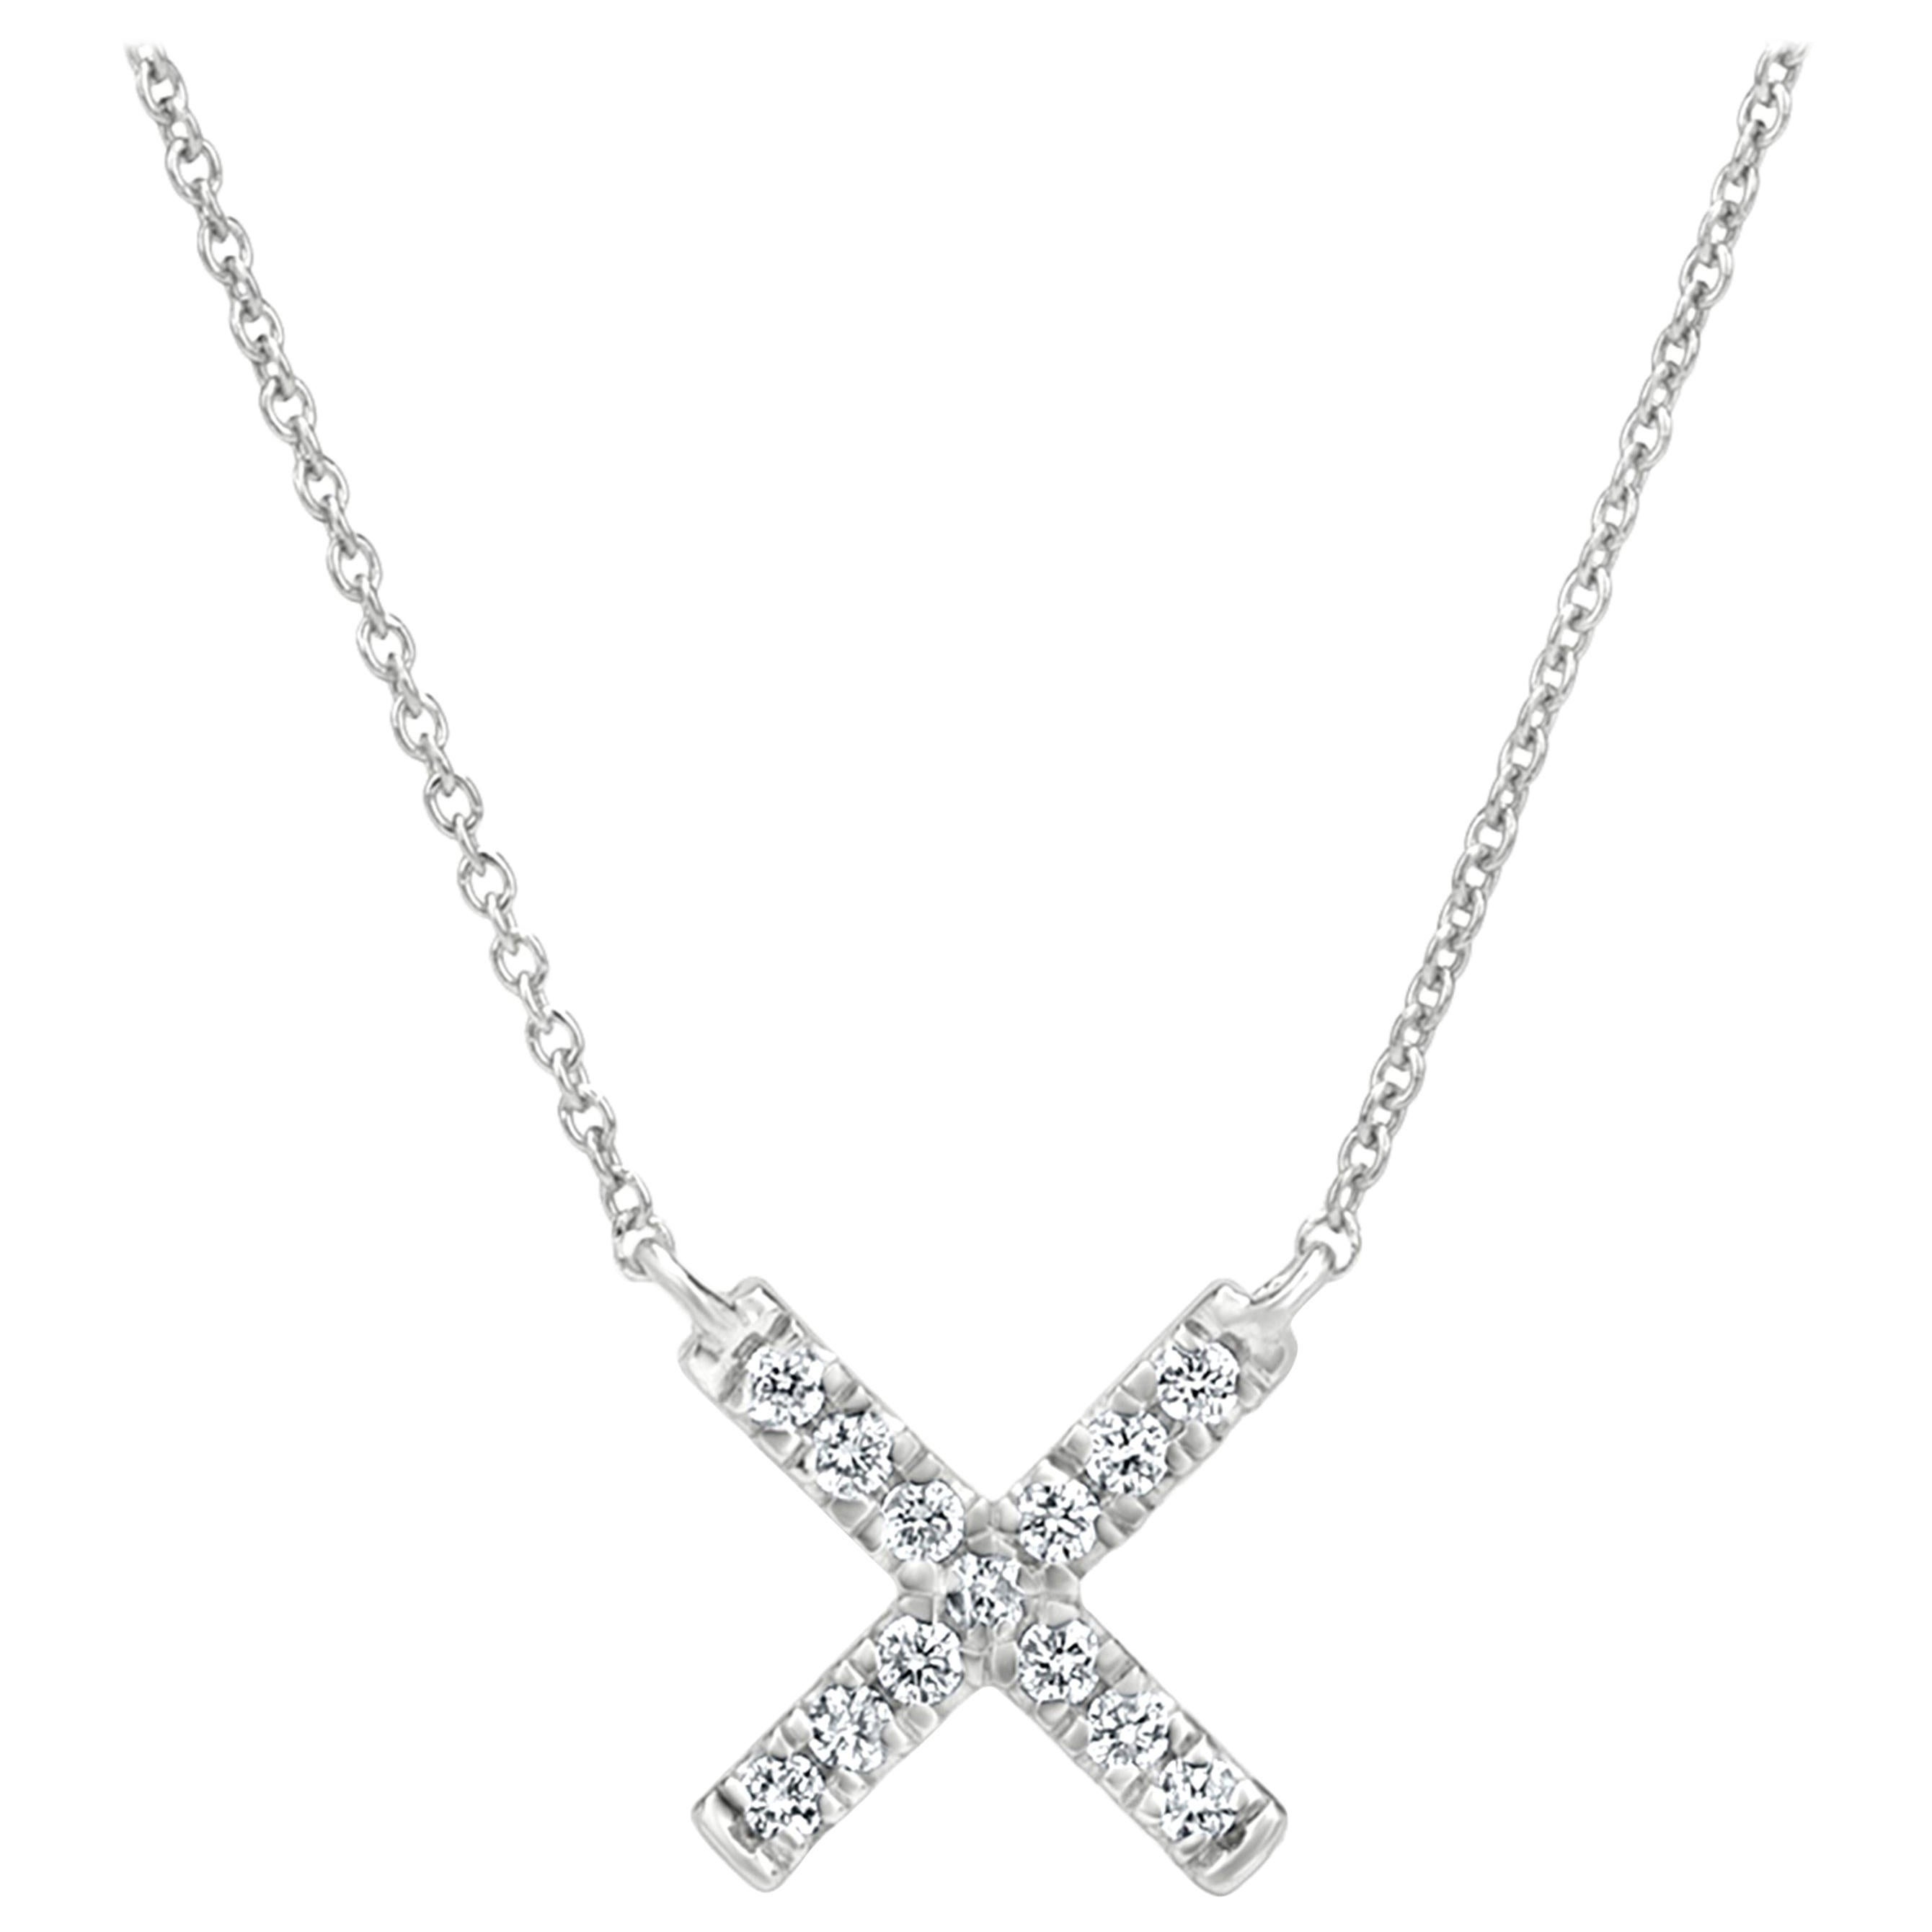 Luxle Diamond x Pendant Necklace in 18k White Gold